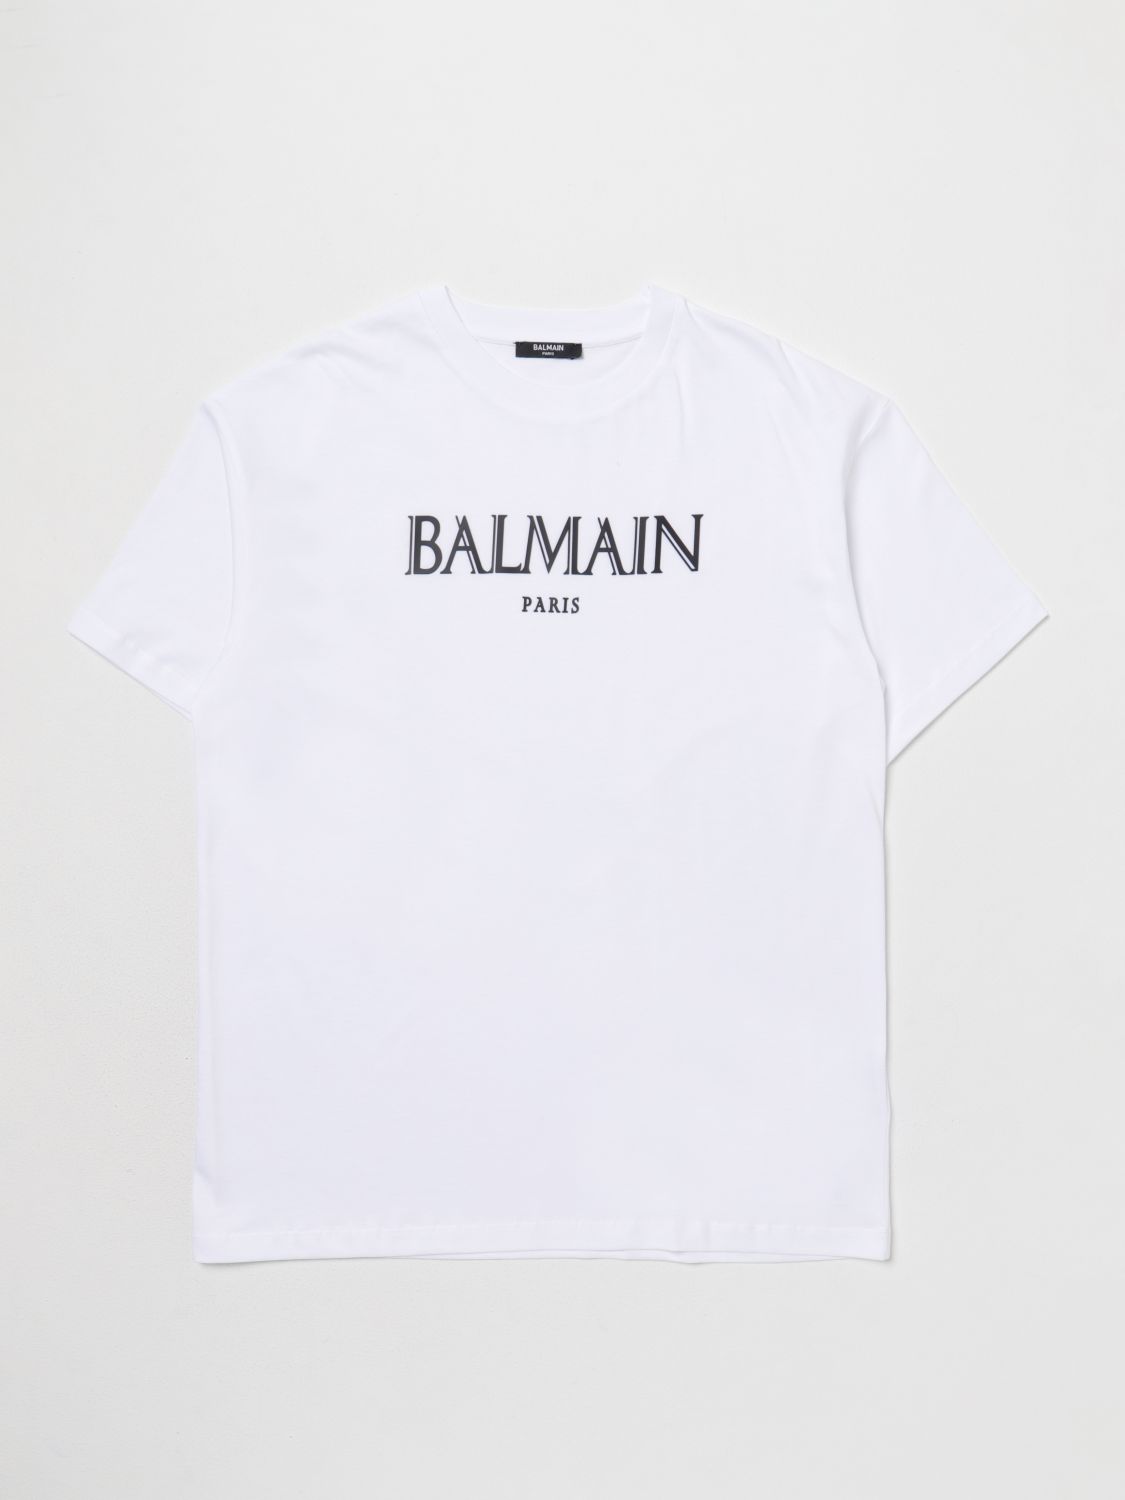 Balmain T-shirt  Kids Kinder Farbe Weiss In White